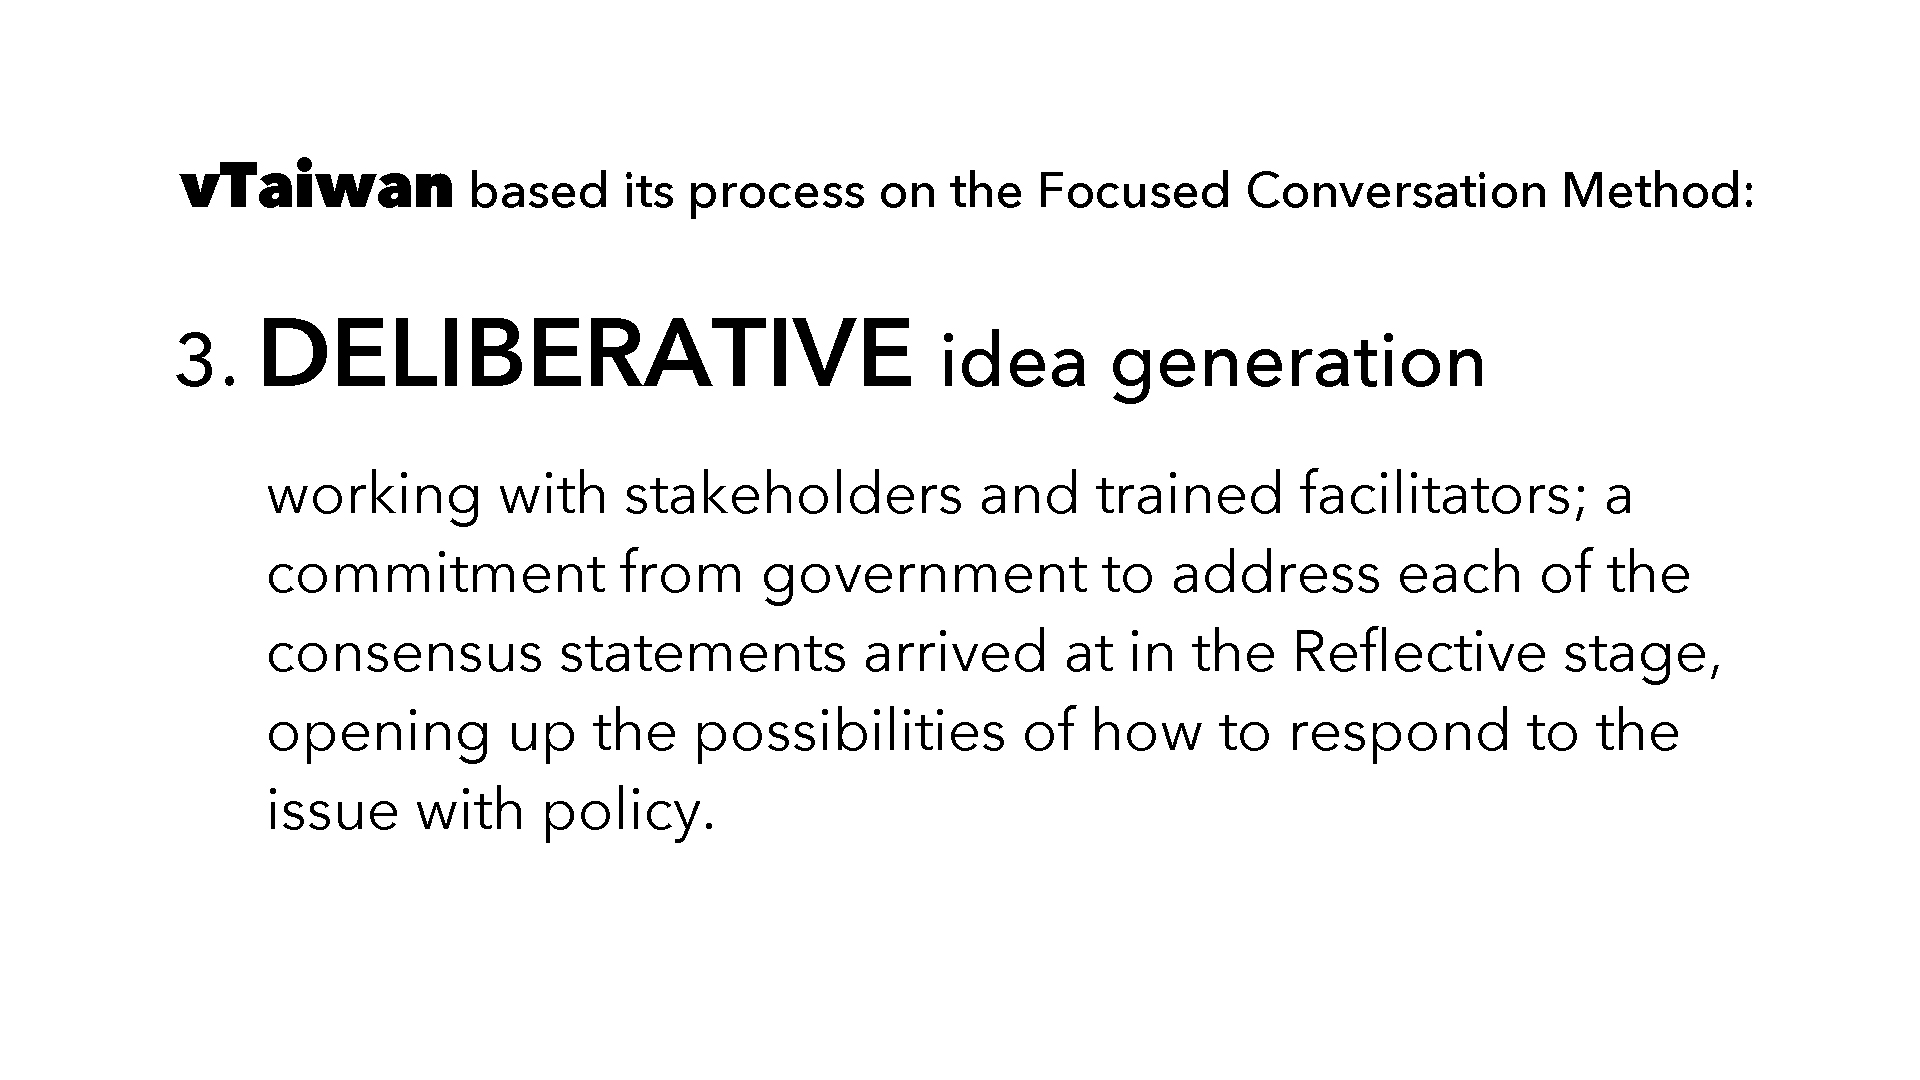 Deliberative idea generation